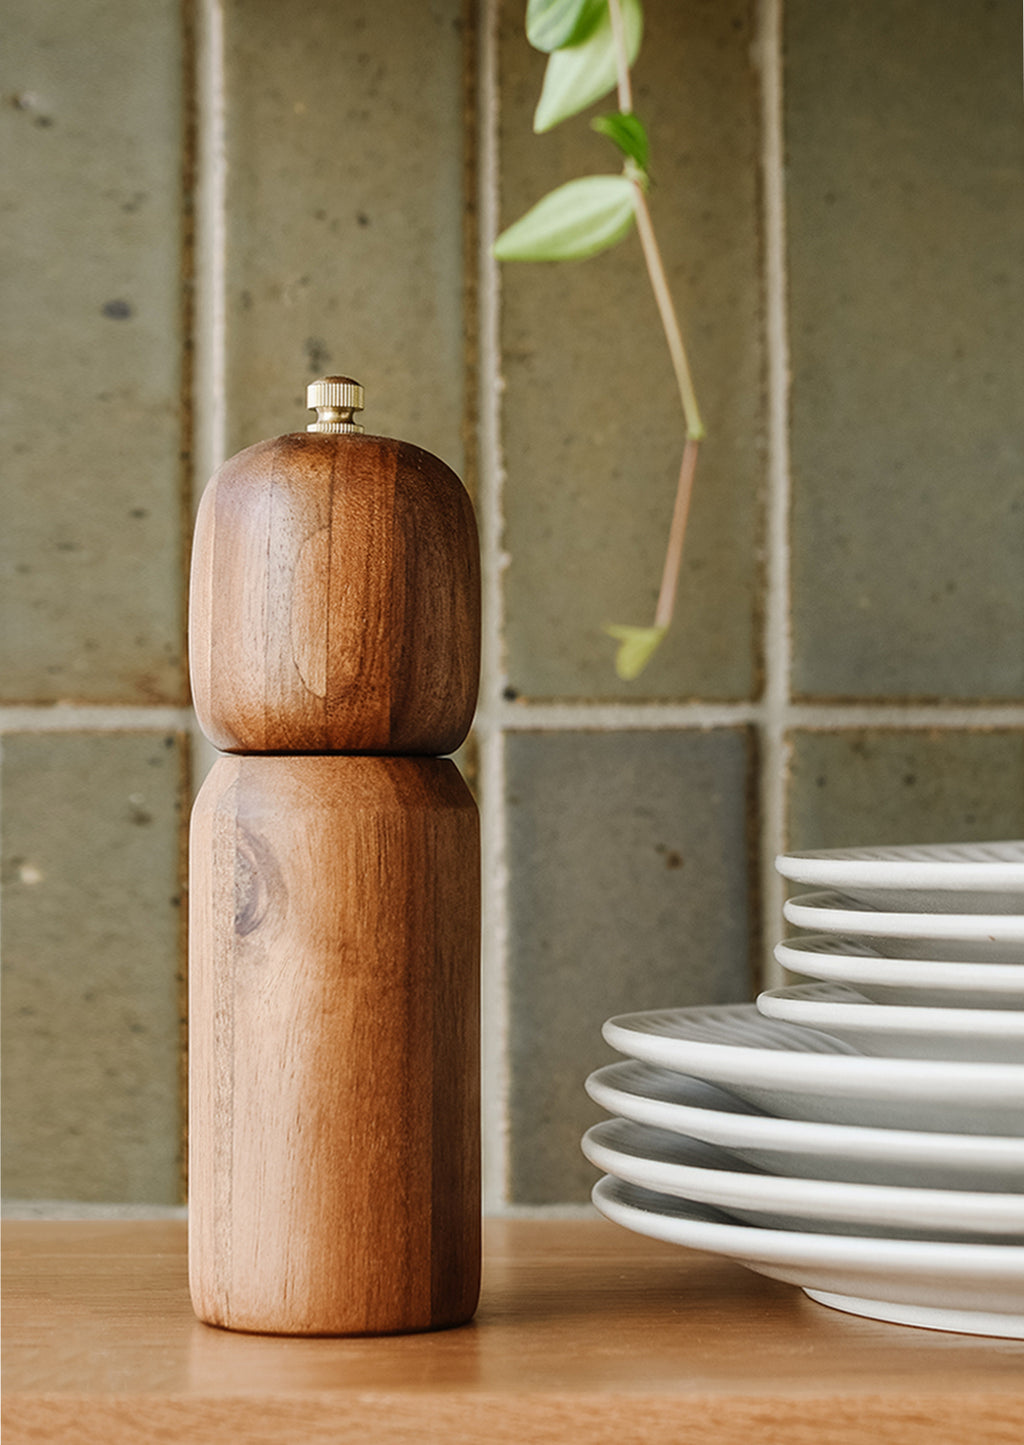 2: A wooden pepper grinder on a kitchen shelf.